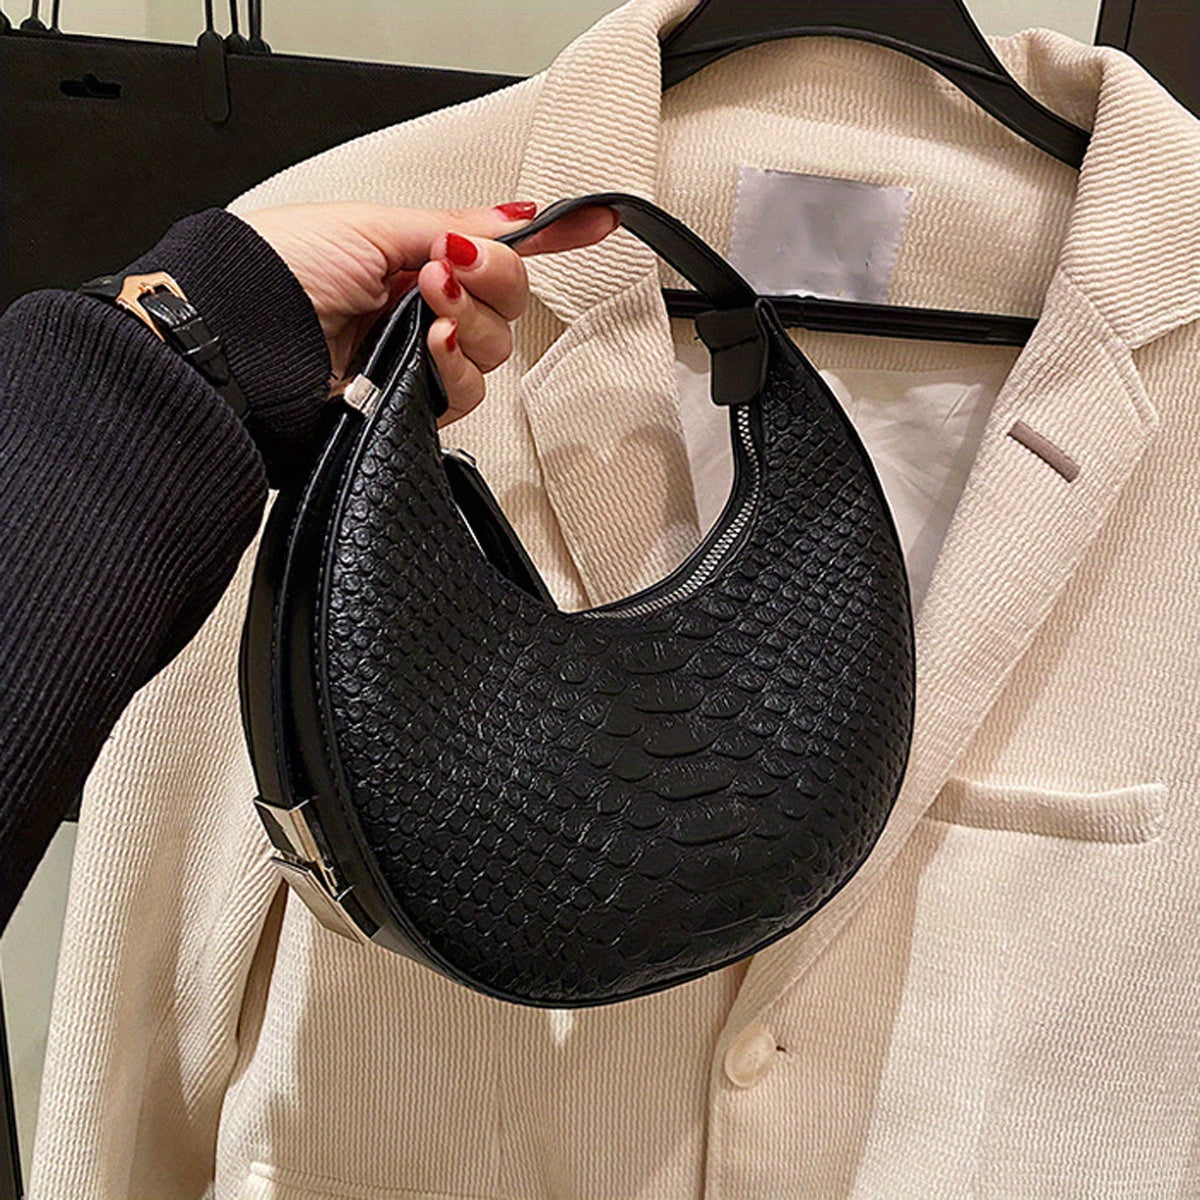 realaiot Minimalist Crocodile Pattern Baguette Bag, Solid Color Shoulder Bag, All-Match Underarm Bag